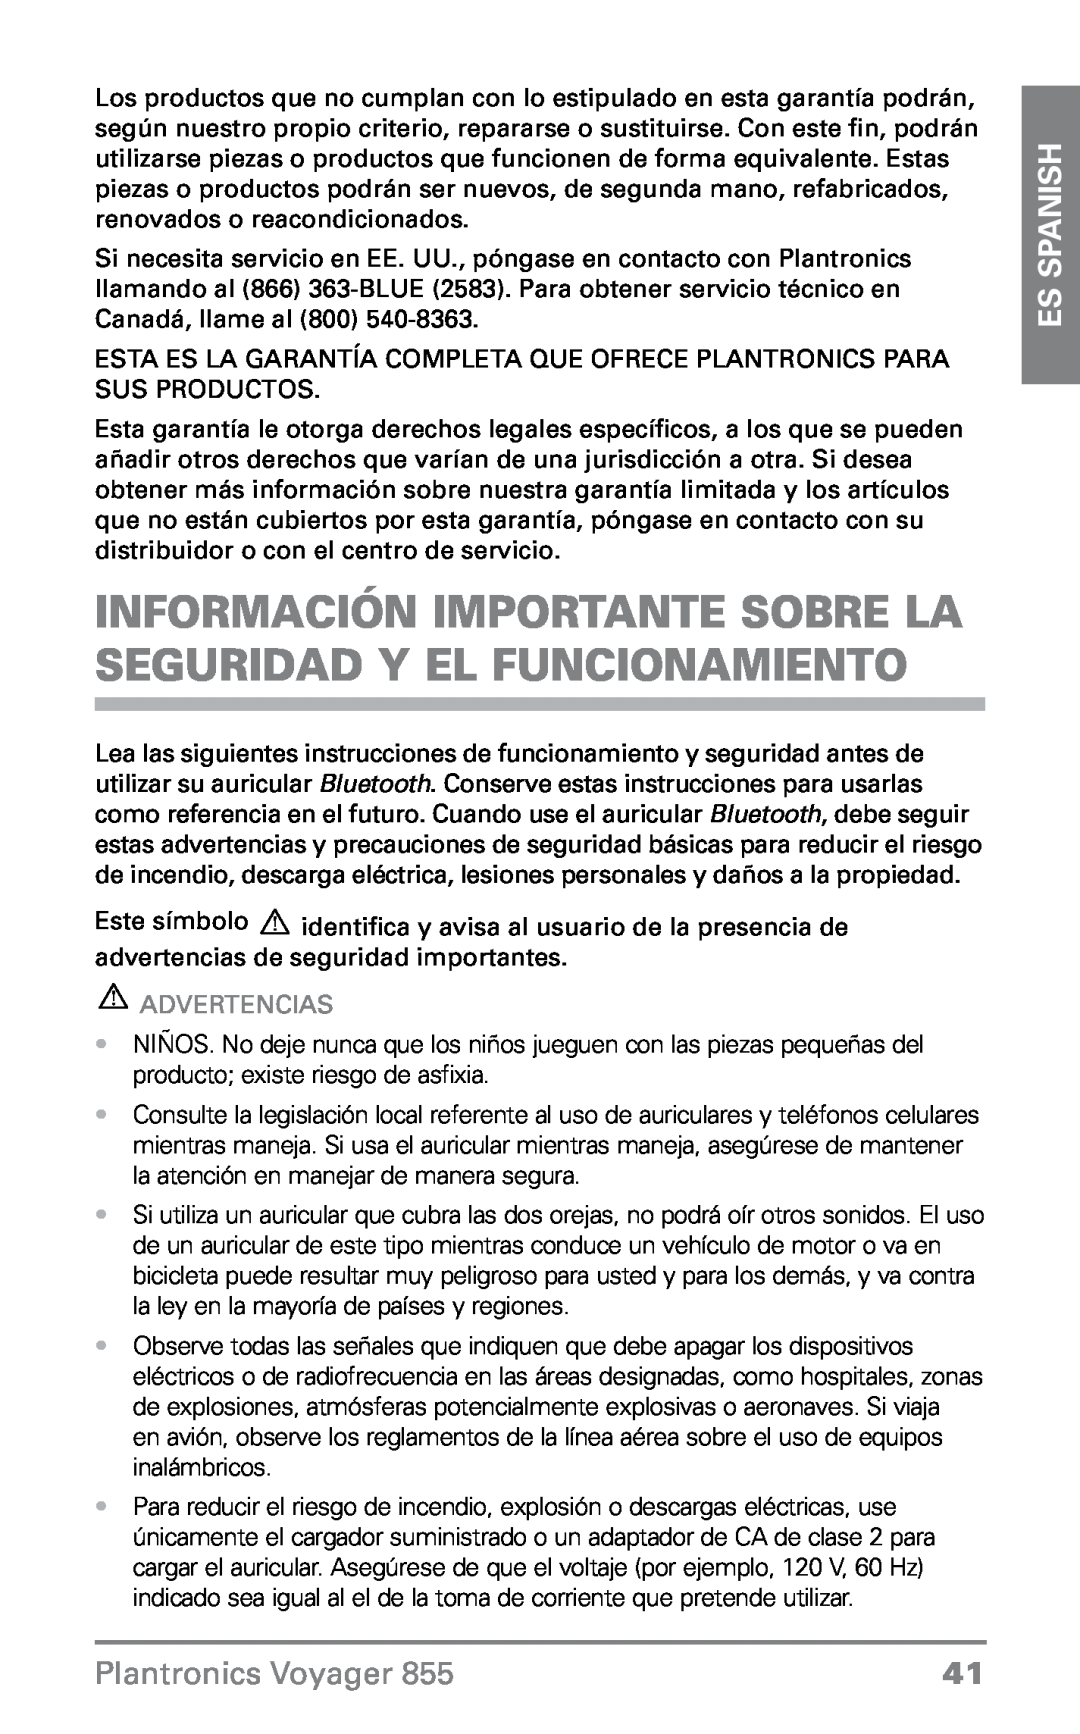 Plantronics VOYAGER855 manual ES Spanish, Plantronics Voyager, Advertencias 